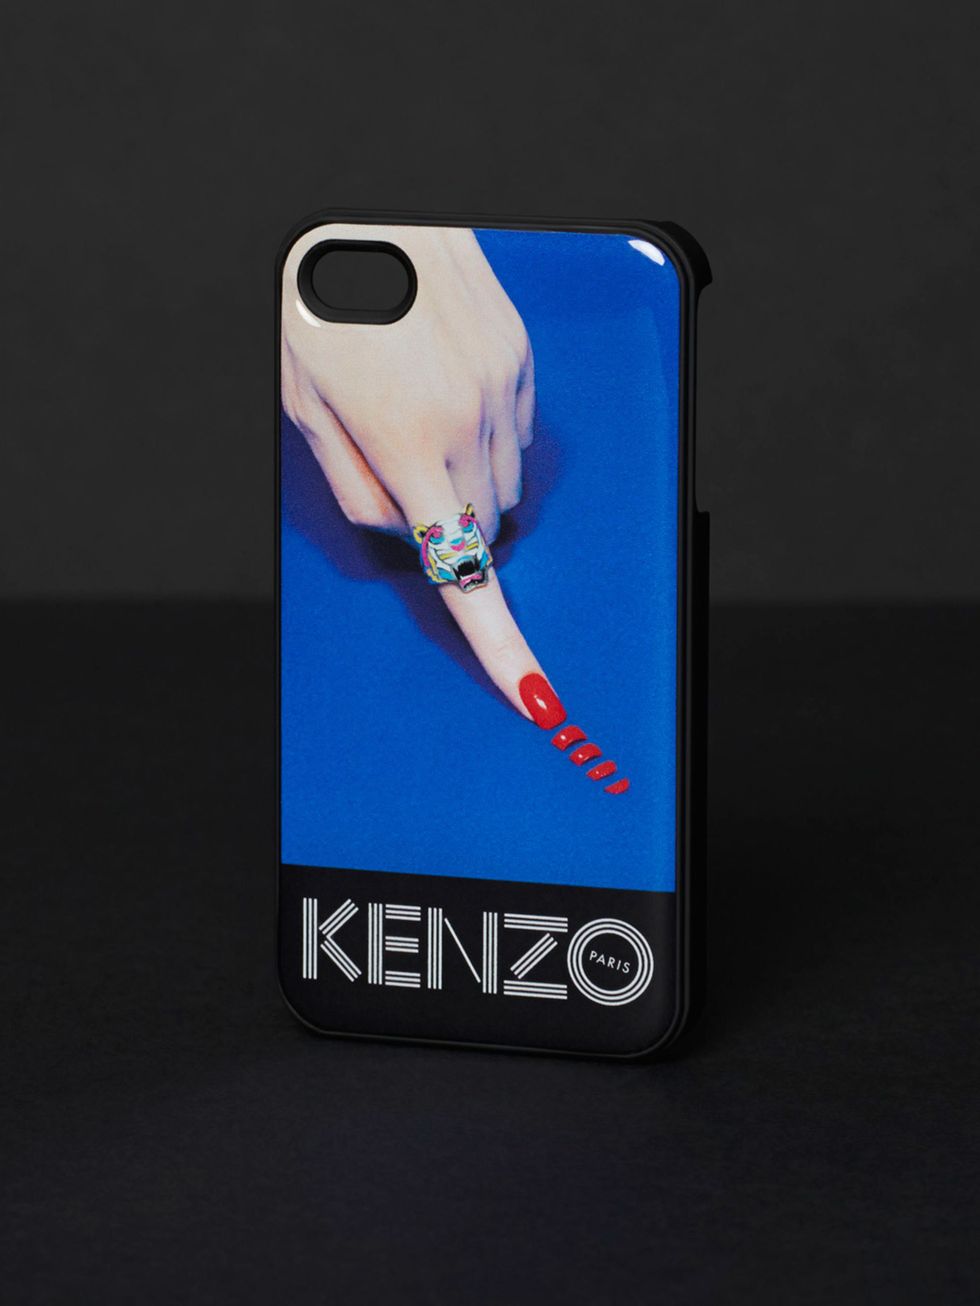 <p>Kenzo X Toiletpaper iPhone cover</p>